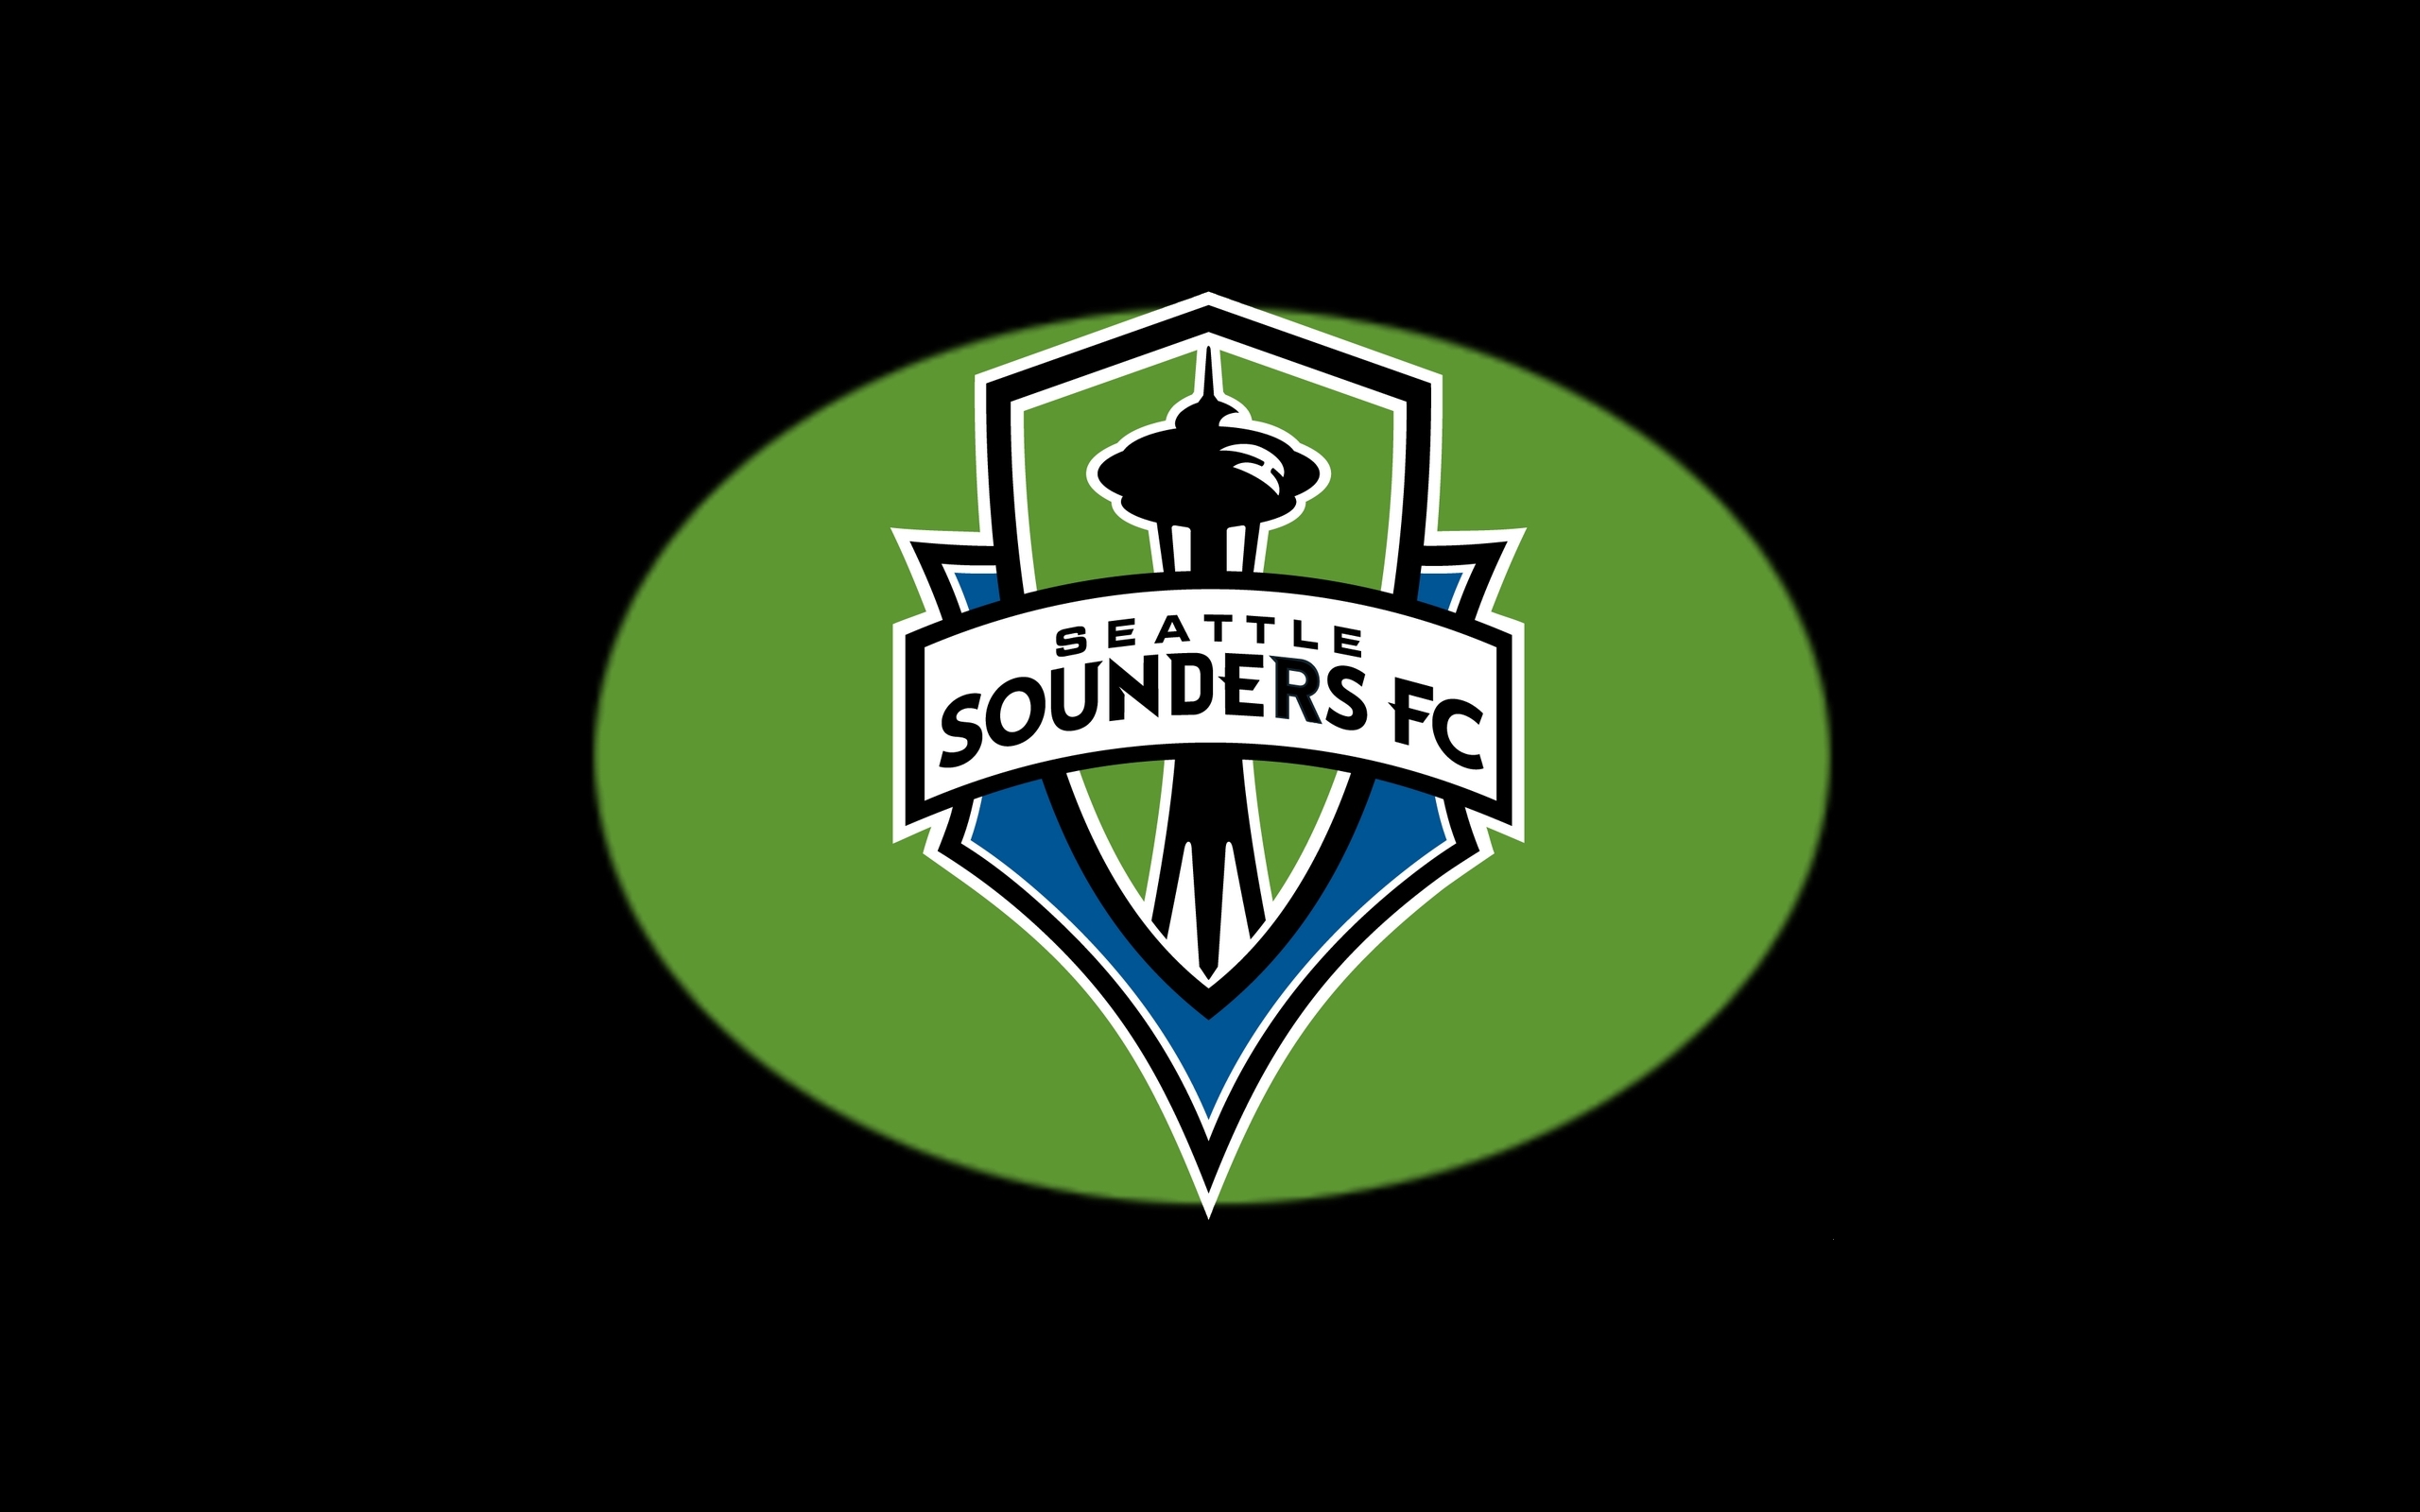 Sports Logos Screensavers User Seattlesounders Jpg